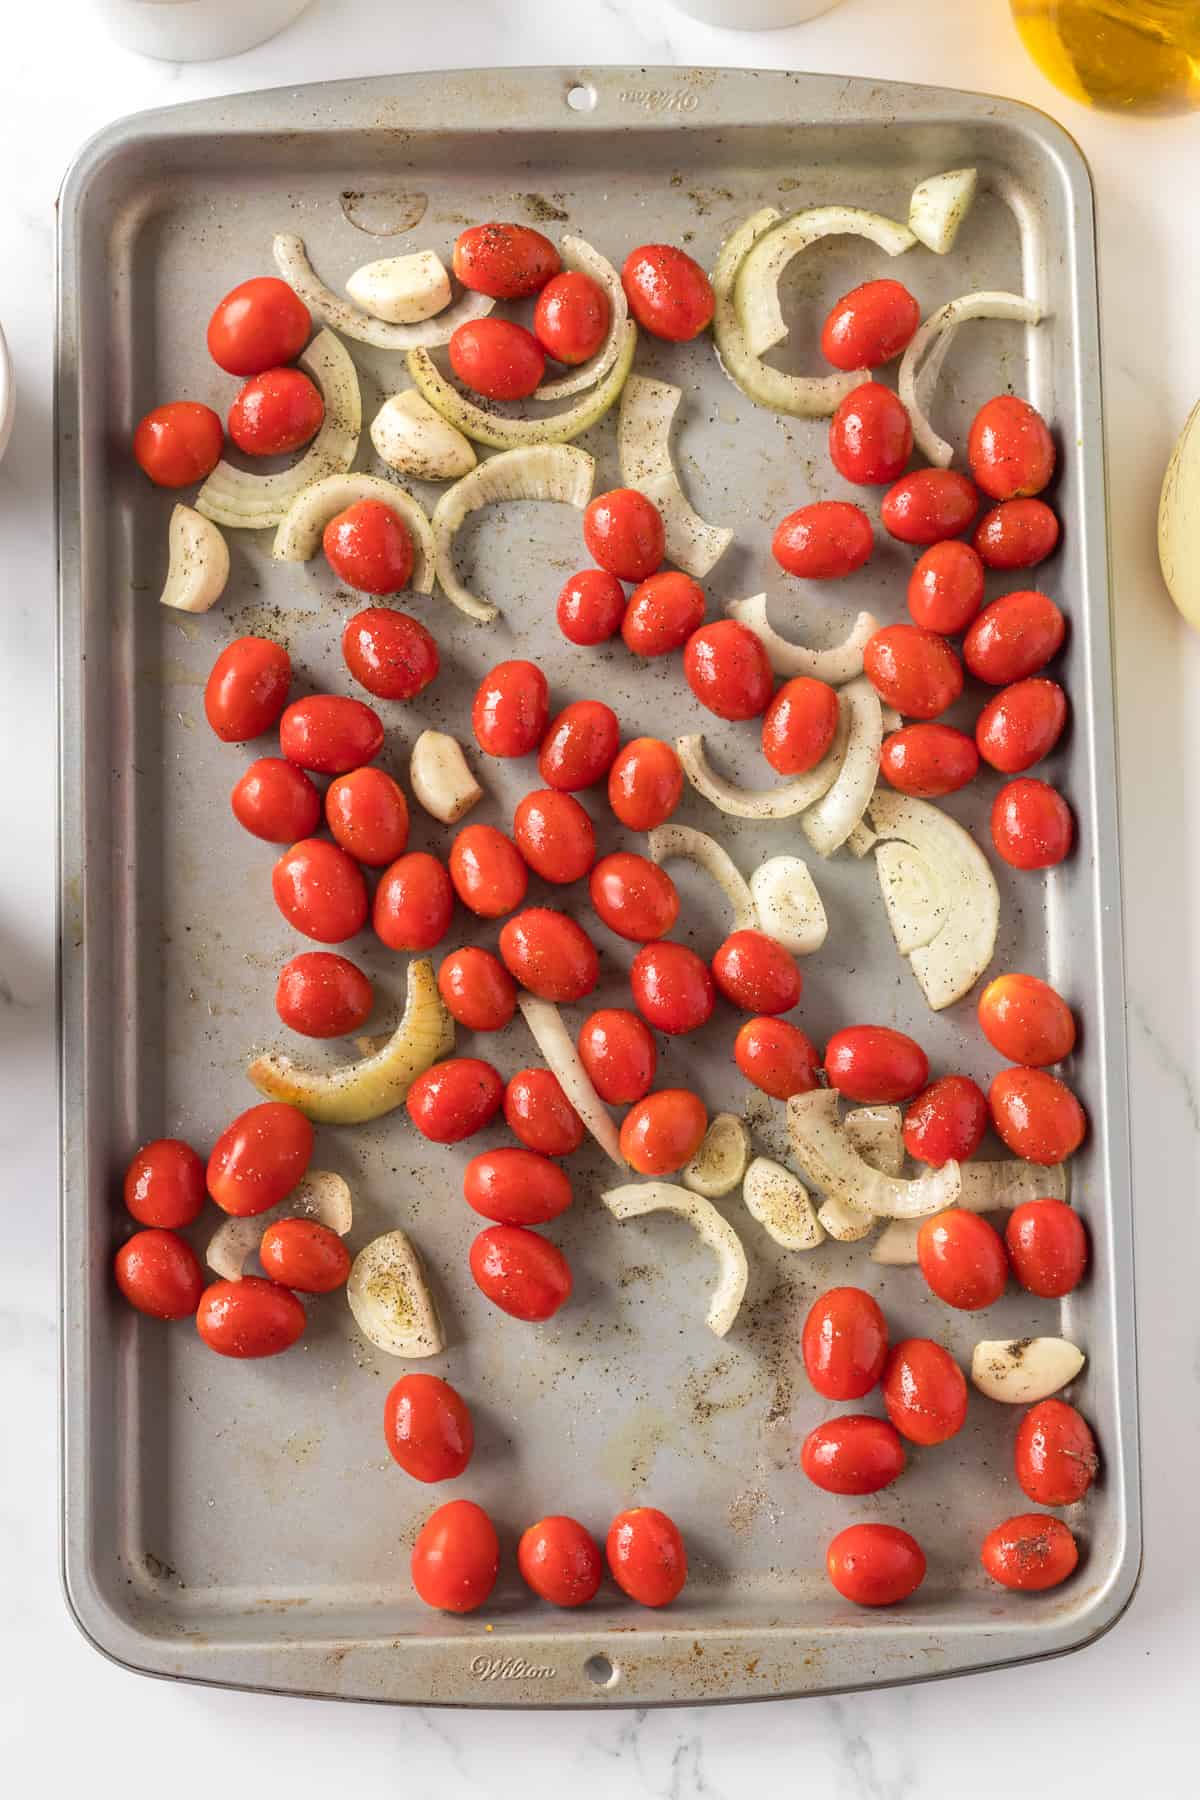 Cherry tomato, onion and garlic on the baking sheet.